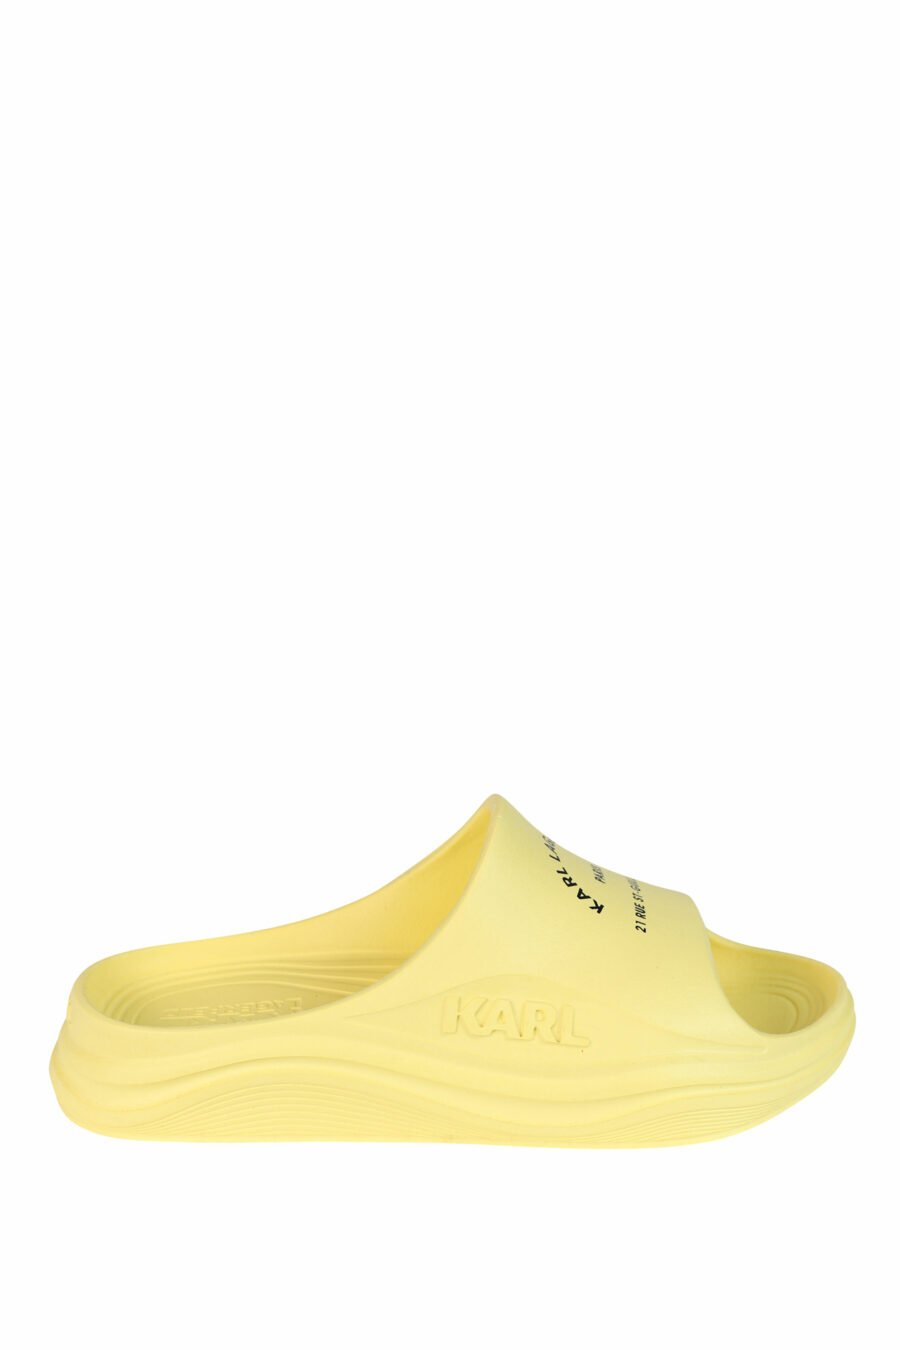 Sandalias amarillas "skoona" con logo - 5059529246012